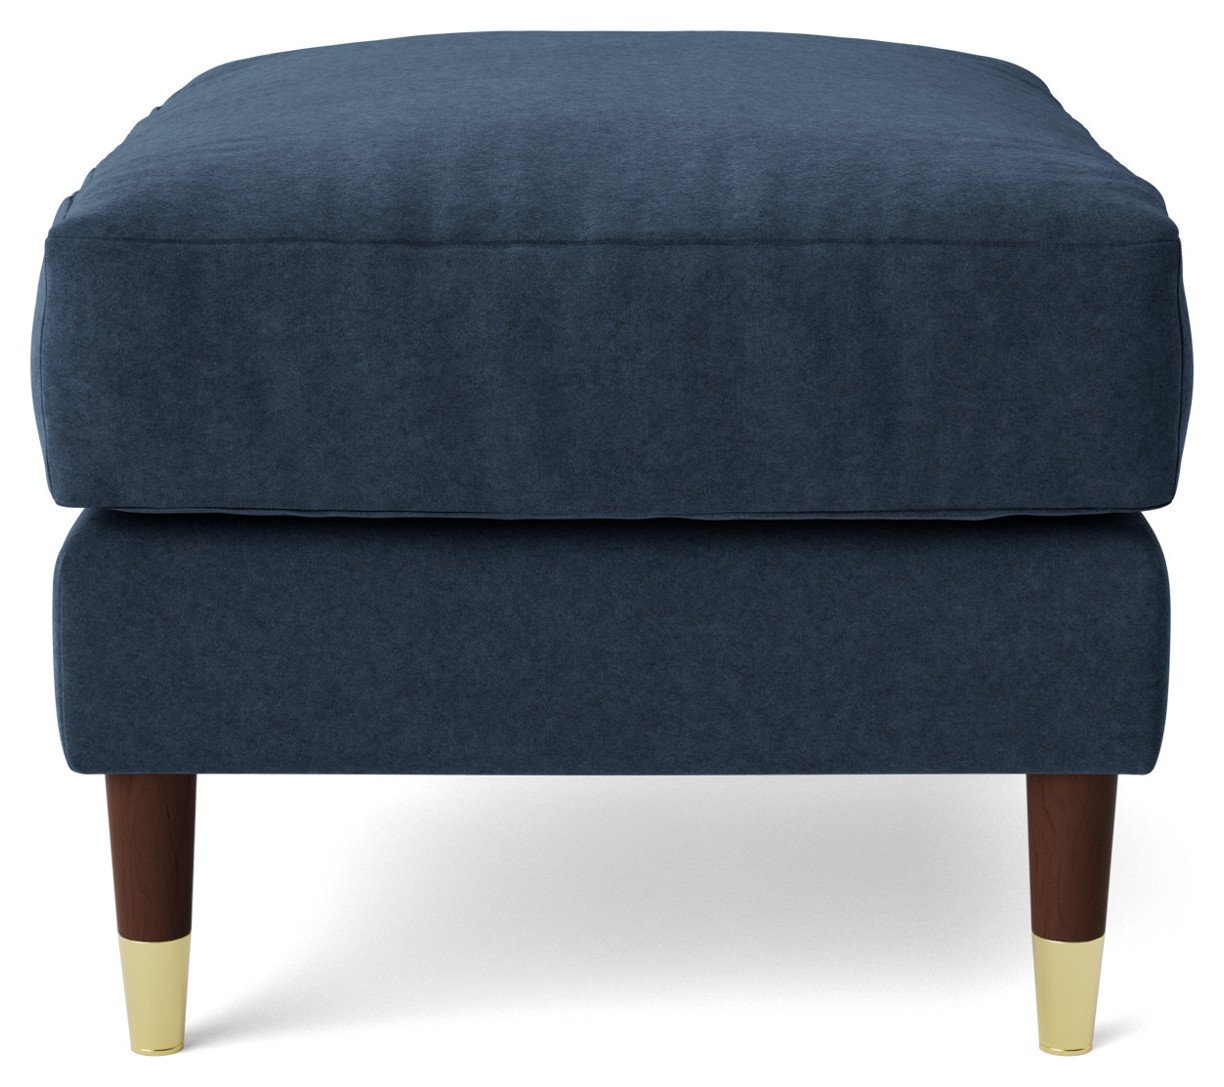 Swoon Rieti Fabric Ottoman Footstool - Indigo Blue